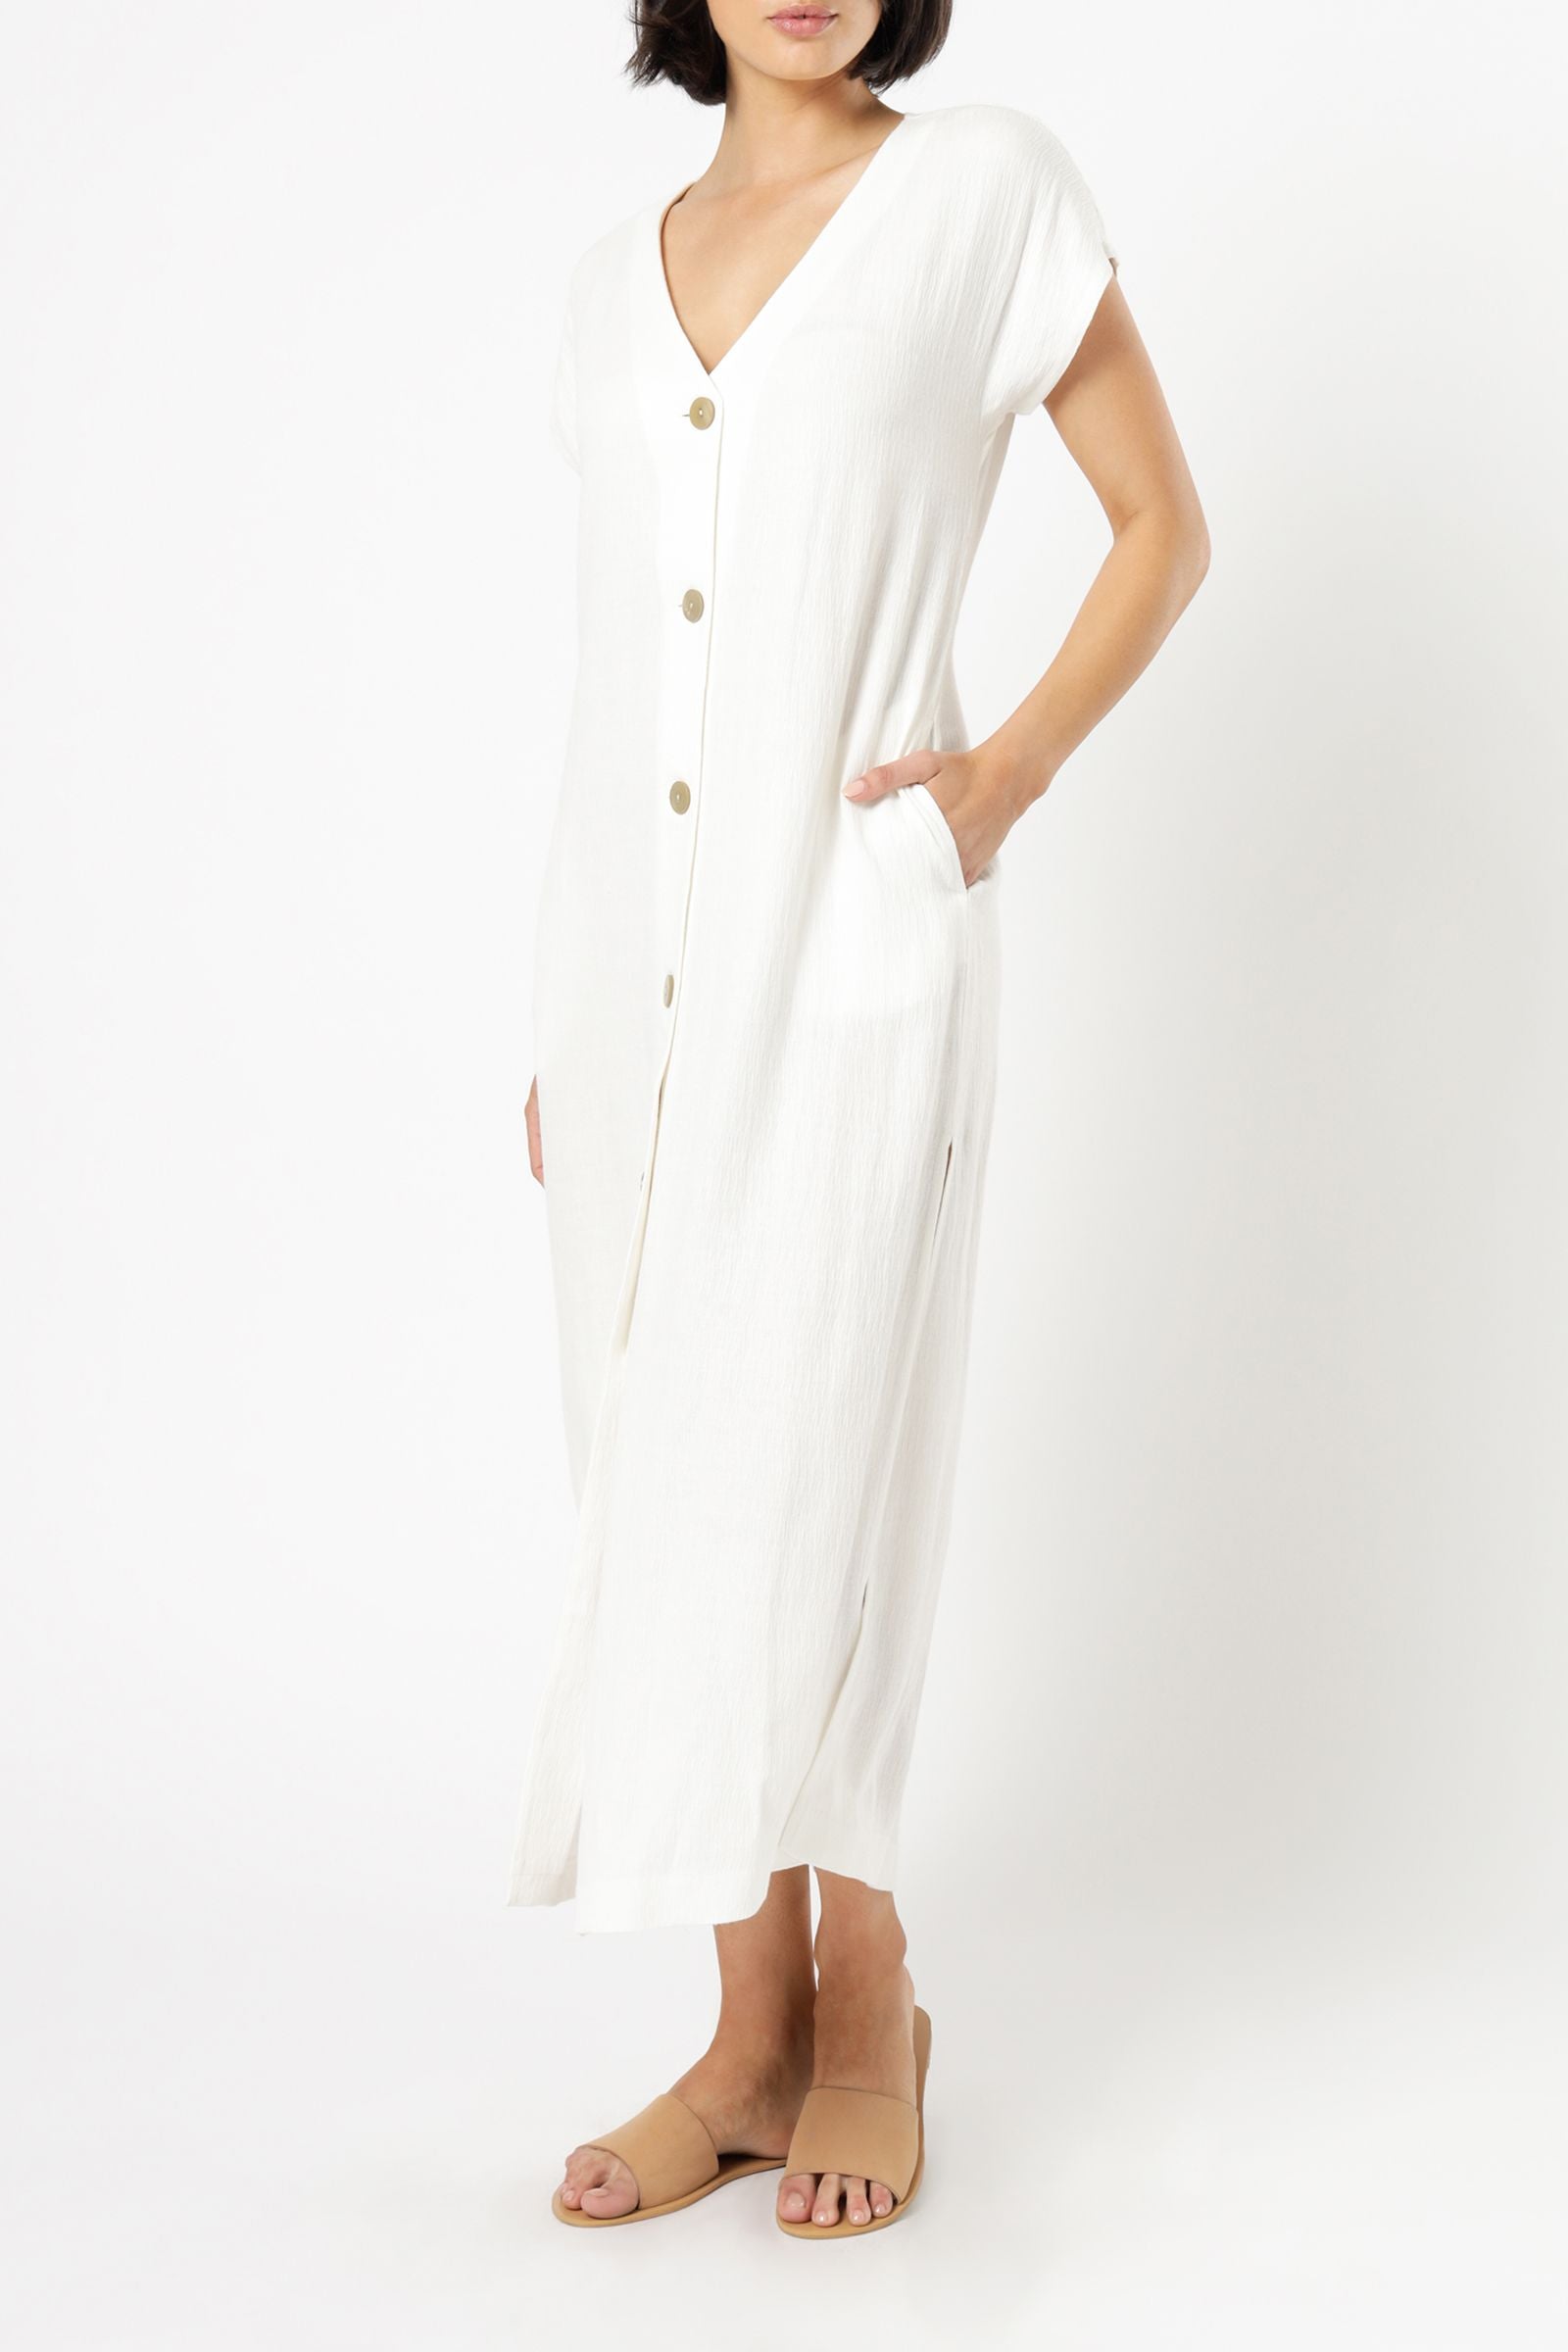 Nude Lucy Rumi Linen Maxi Dress Off White Dress 